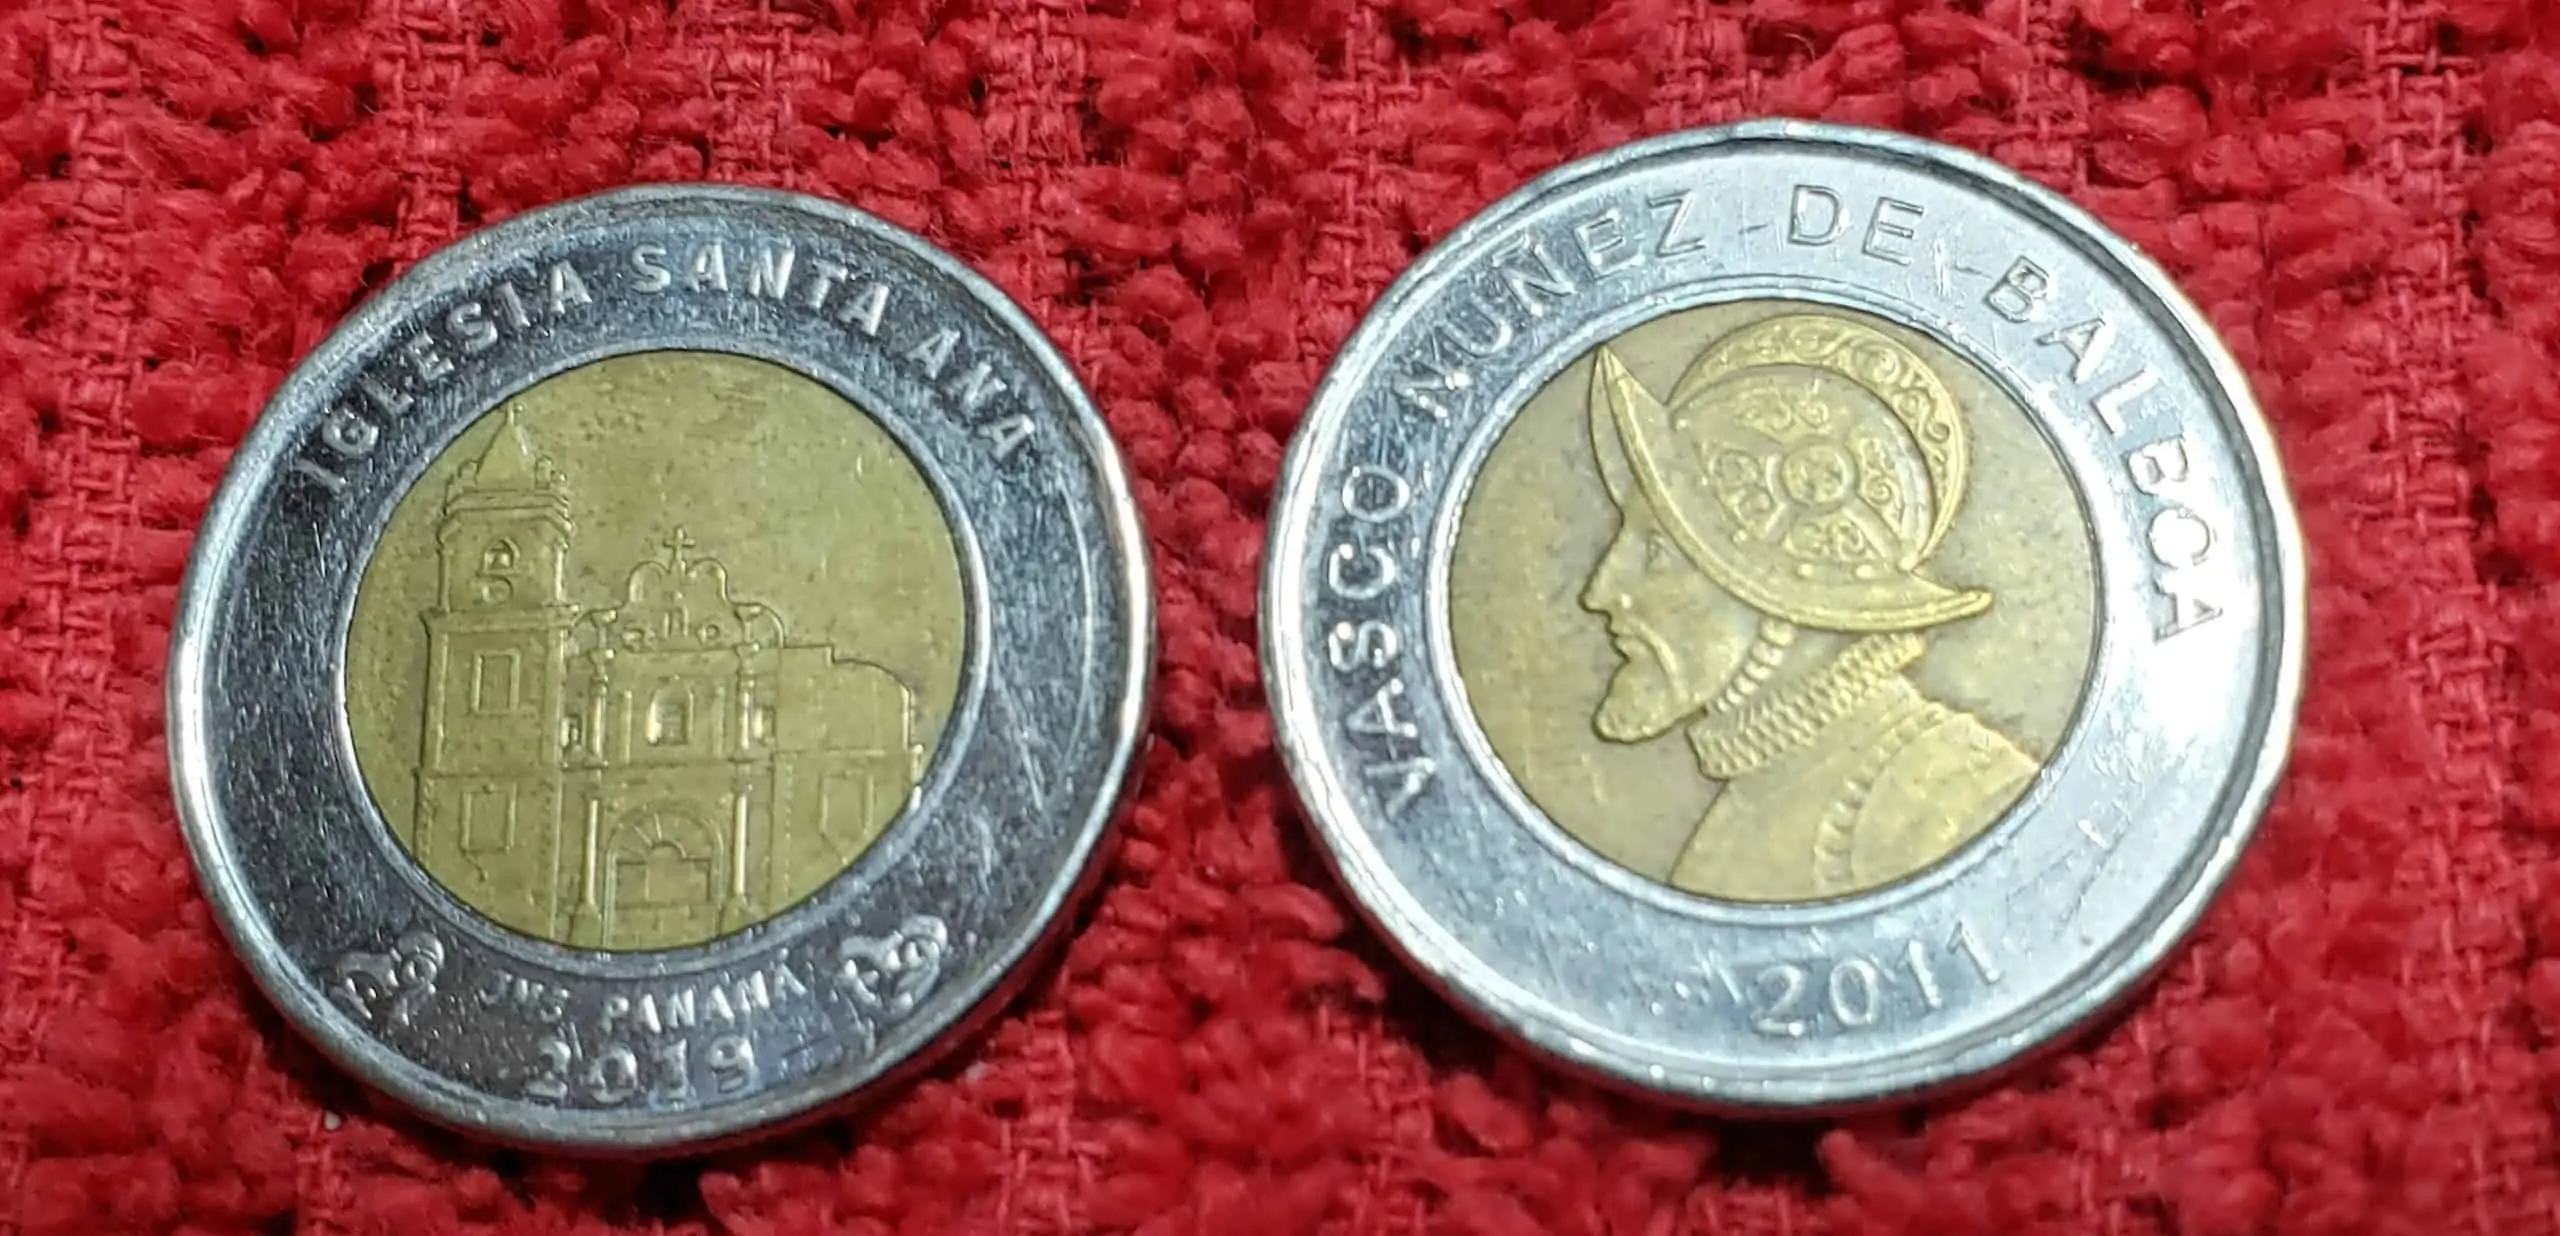 Aksepteres amerikanske dollar i Panama?